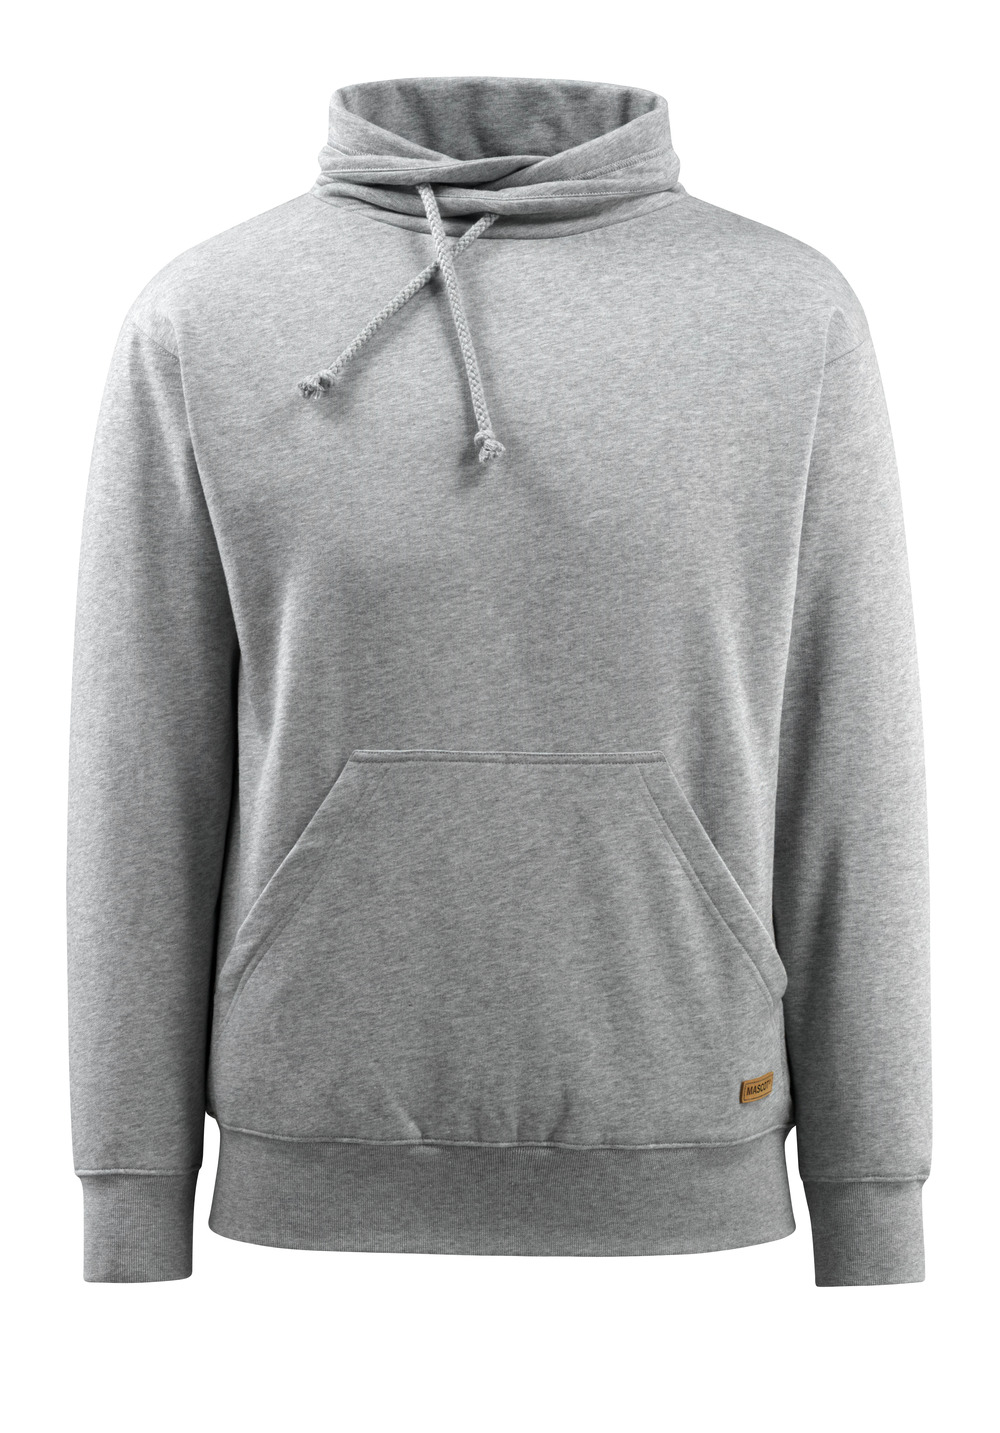 MASCOT-Sweatshirt, Soho, FREESTYLE, 310 g/m², grau-meliert